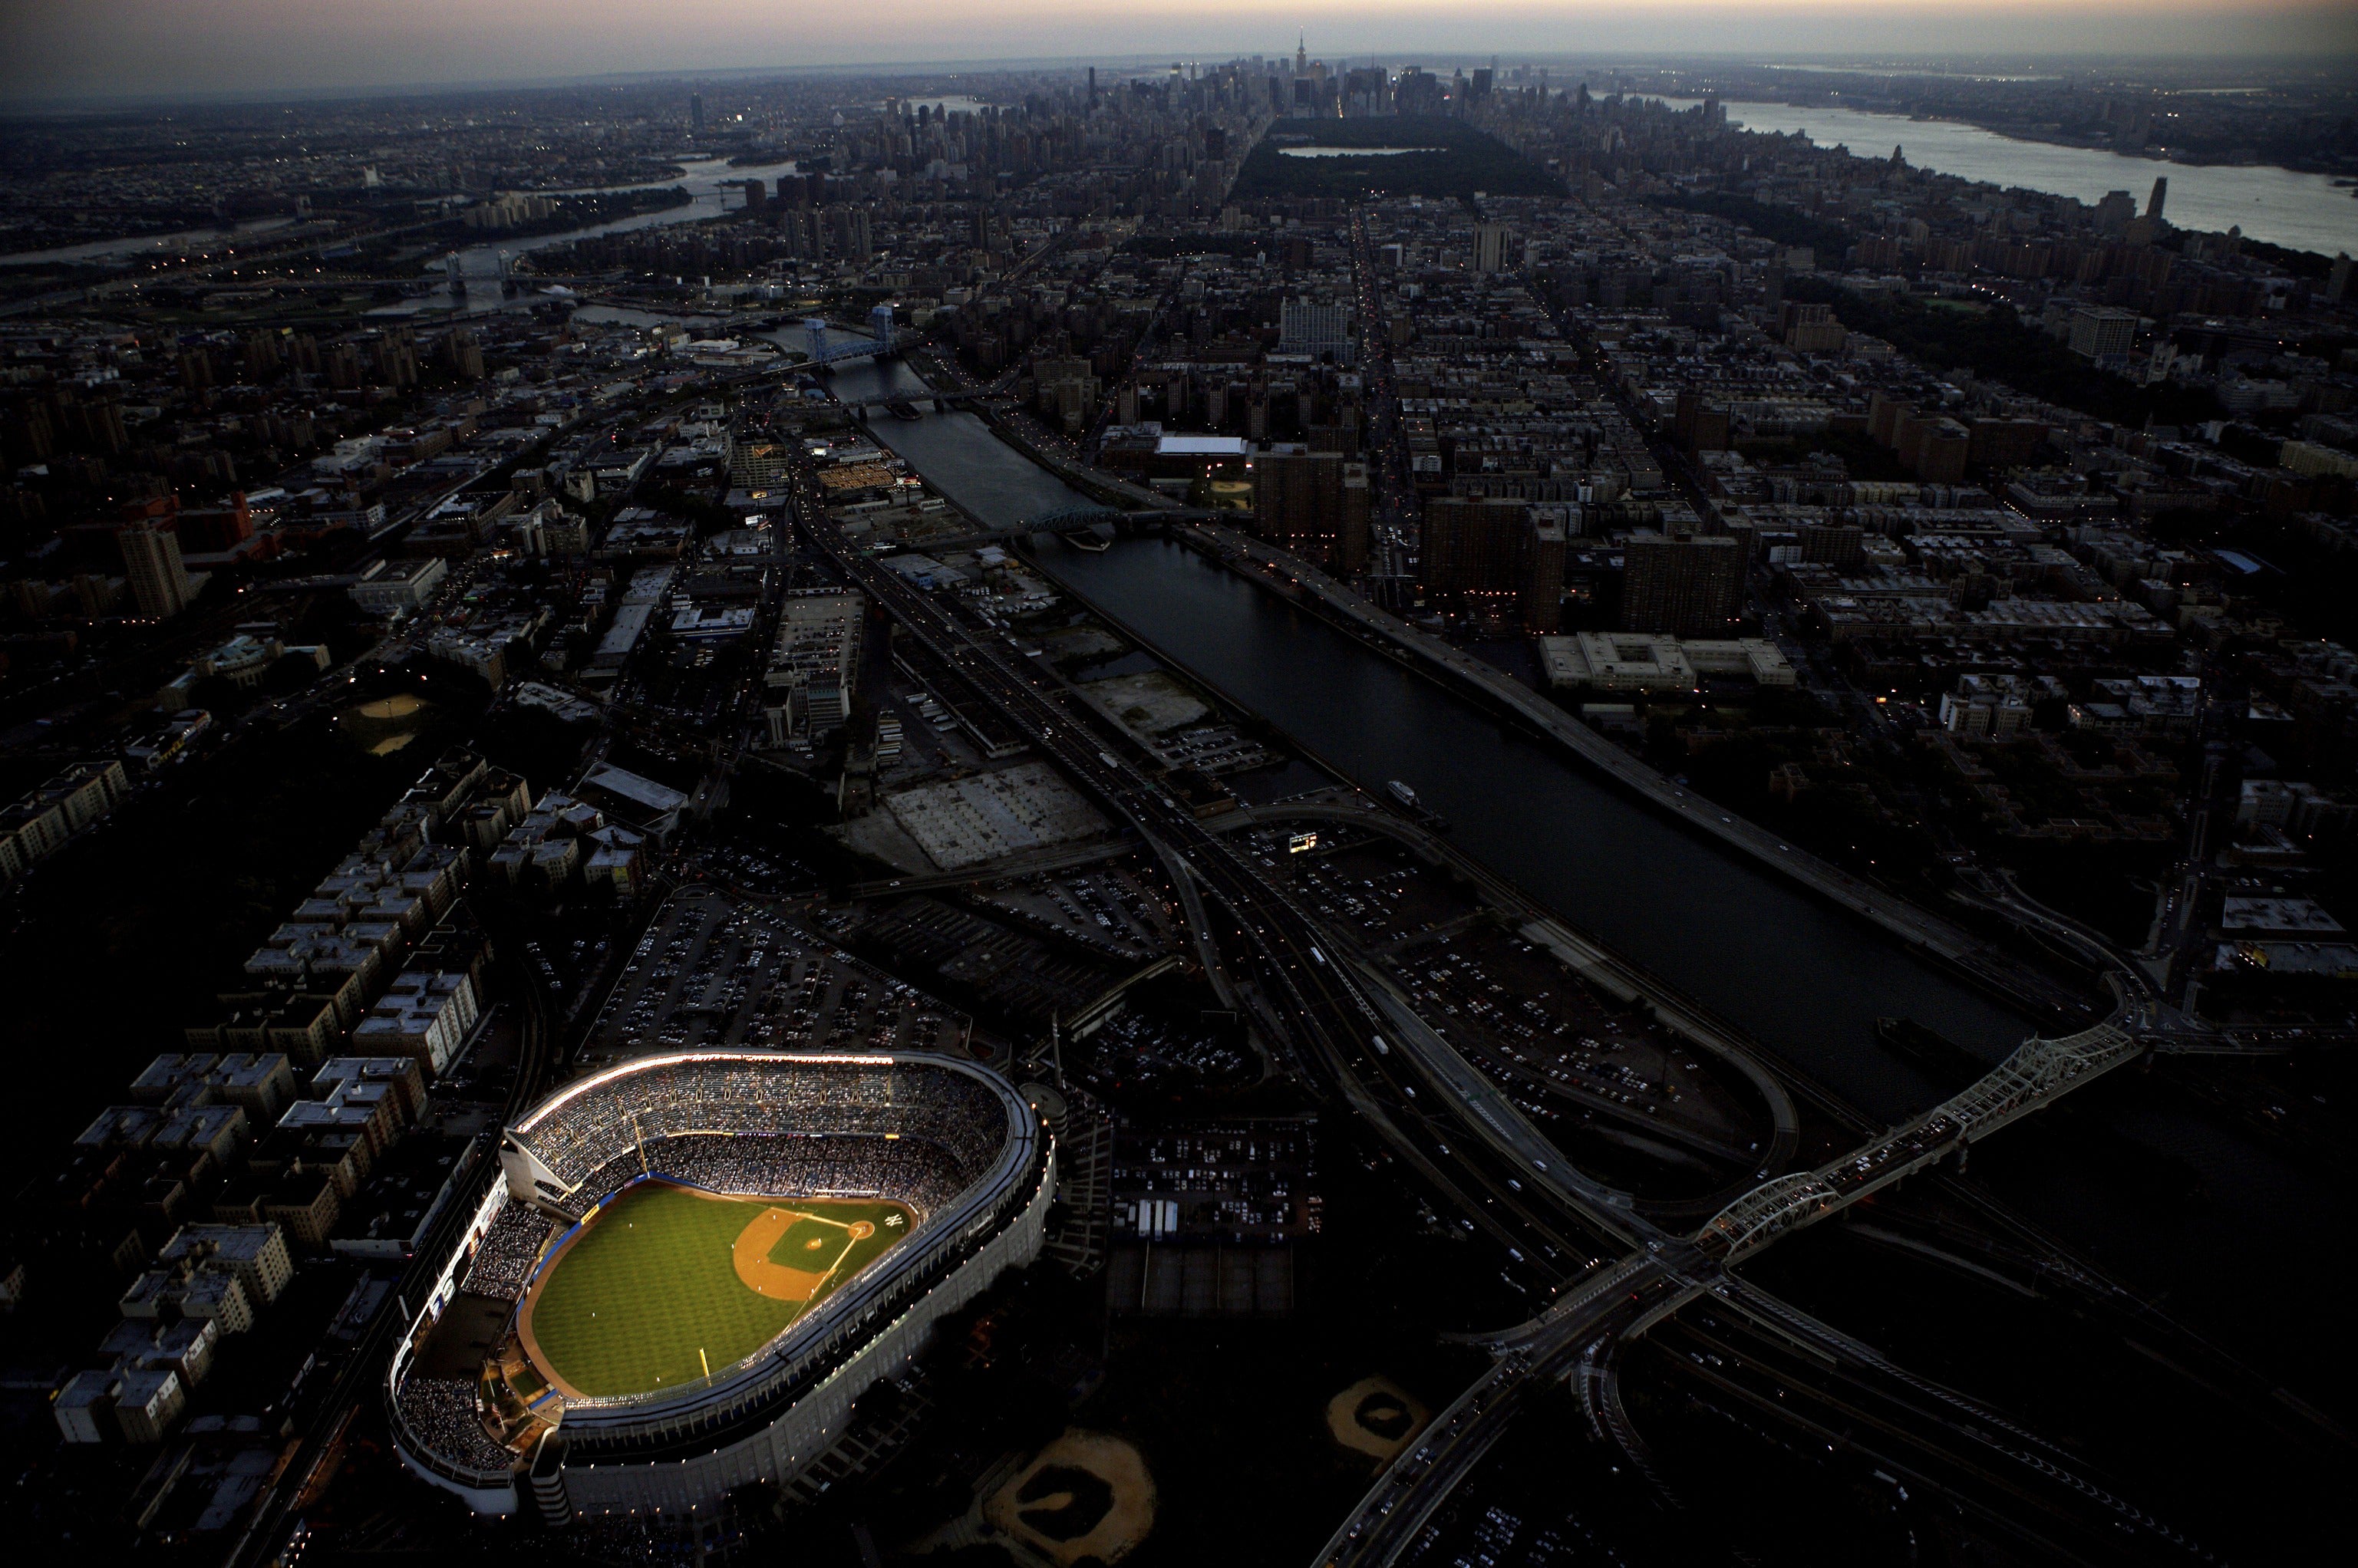 Yankee Stadium Shot from Upper Deck Behind Home Plate